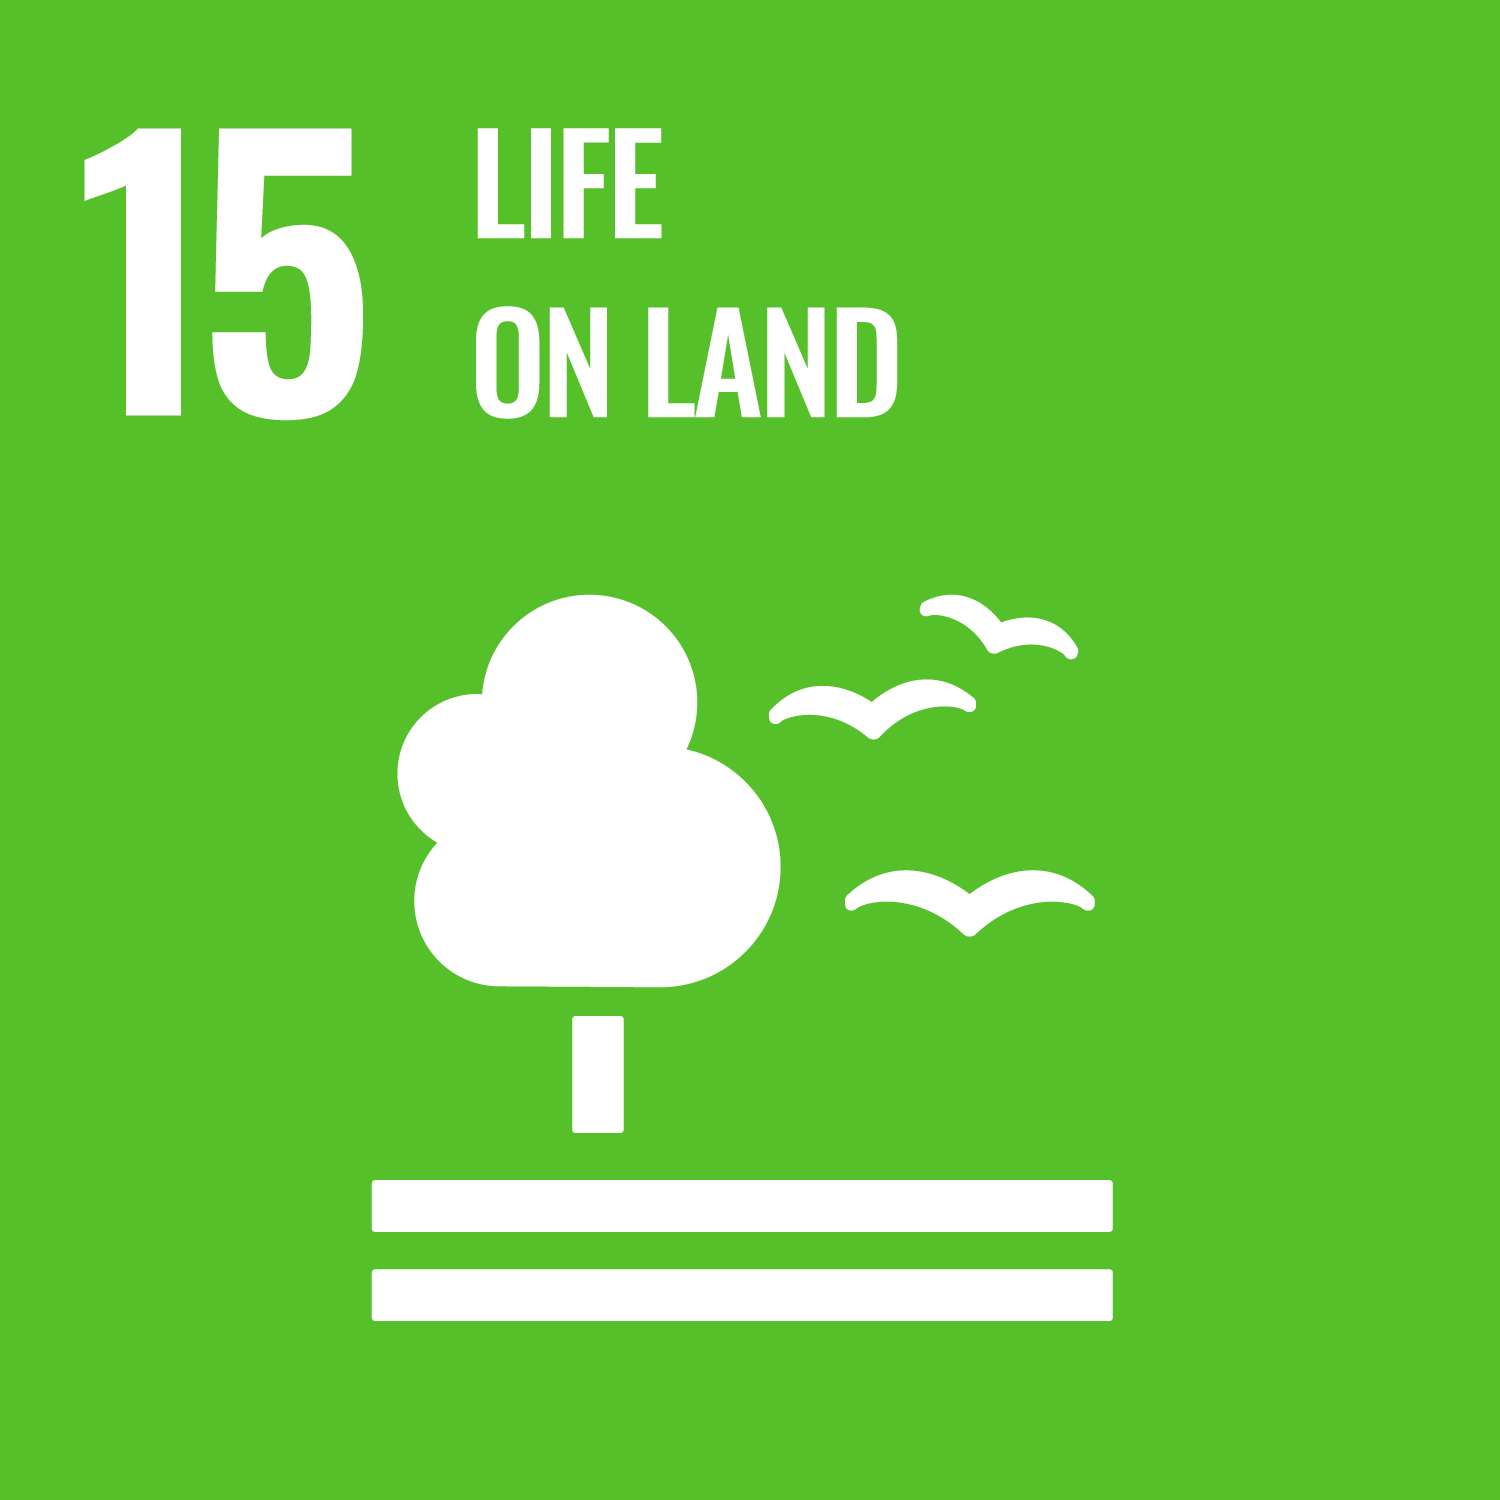 Sustainable Development Goal 15 Life on Land